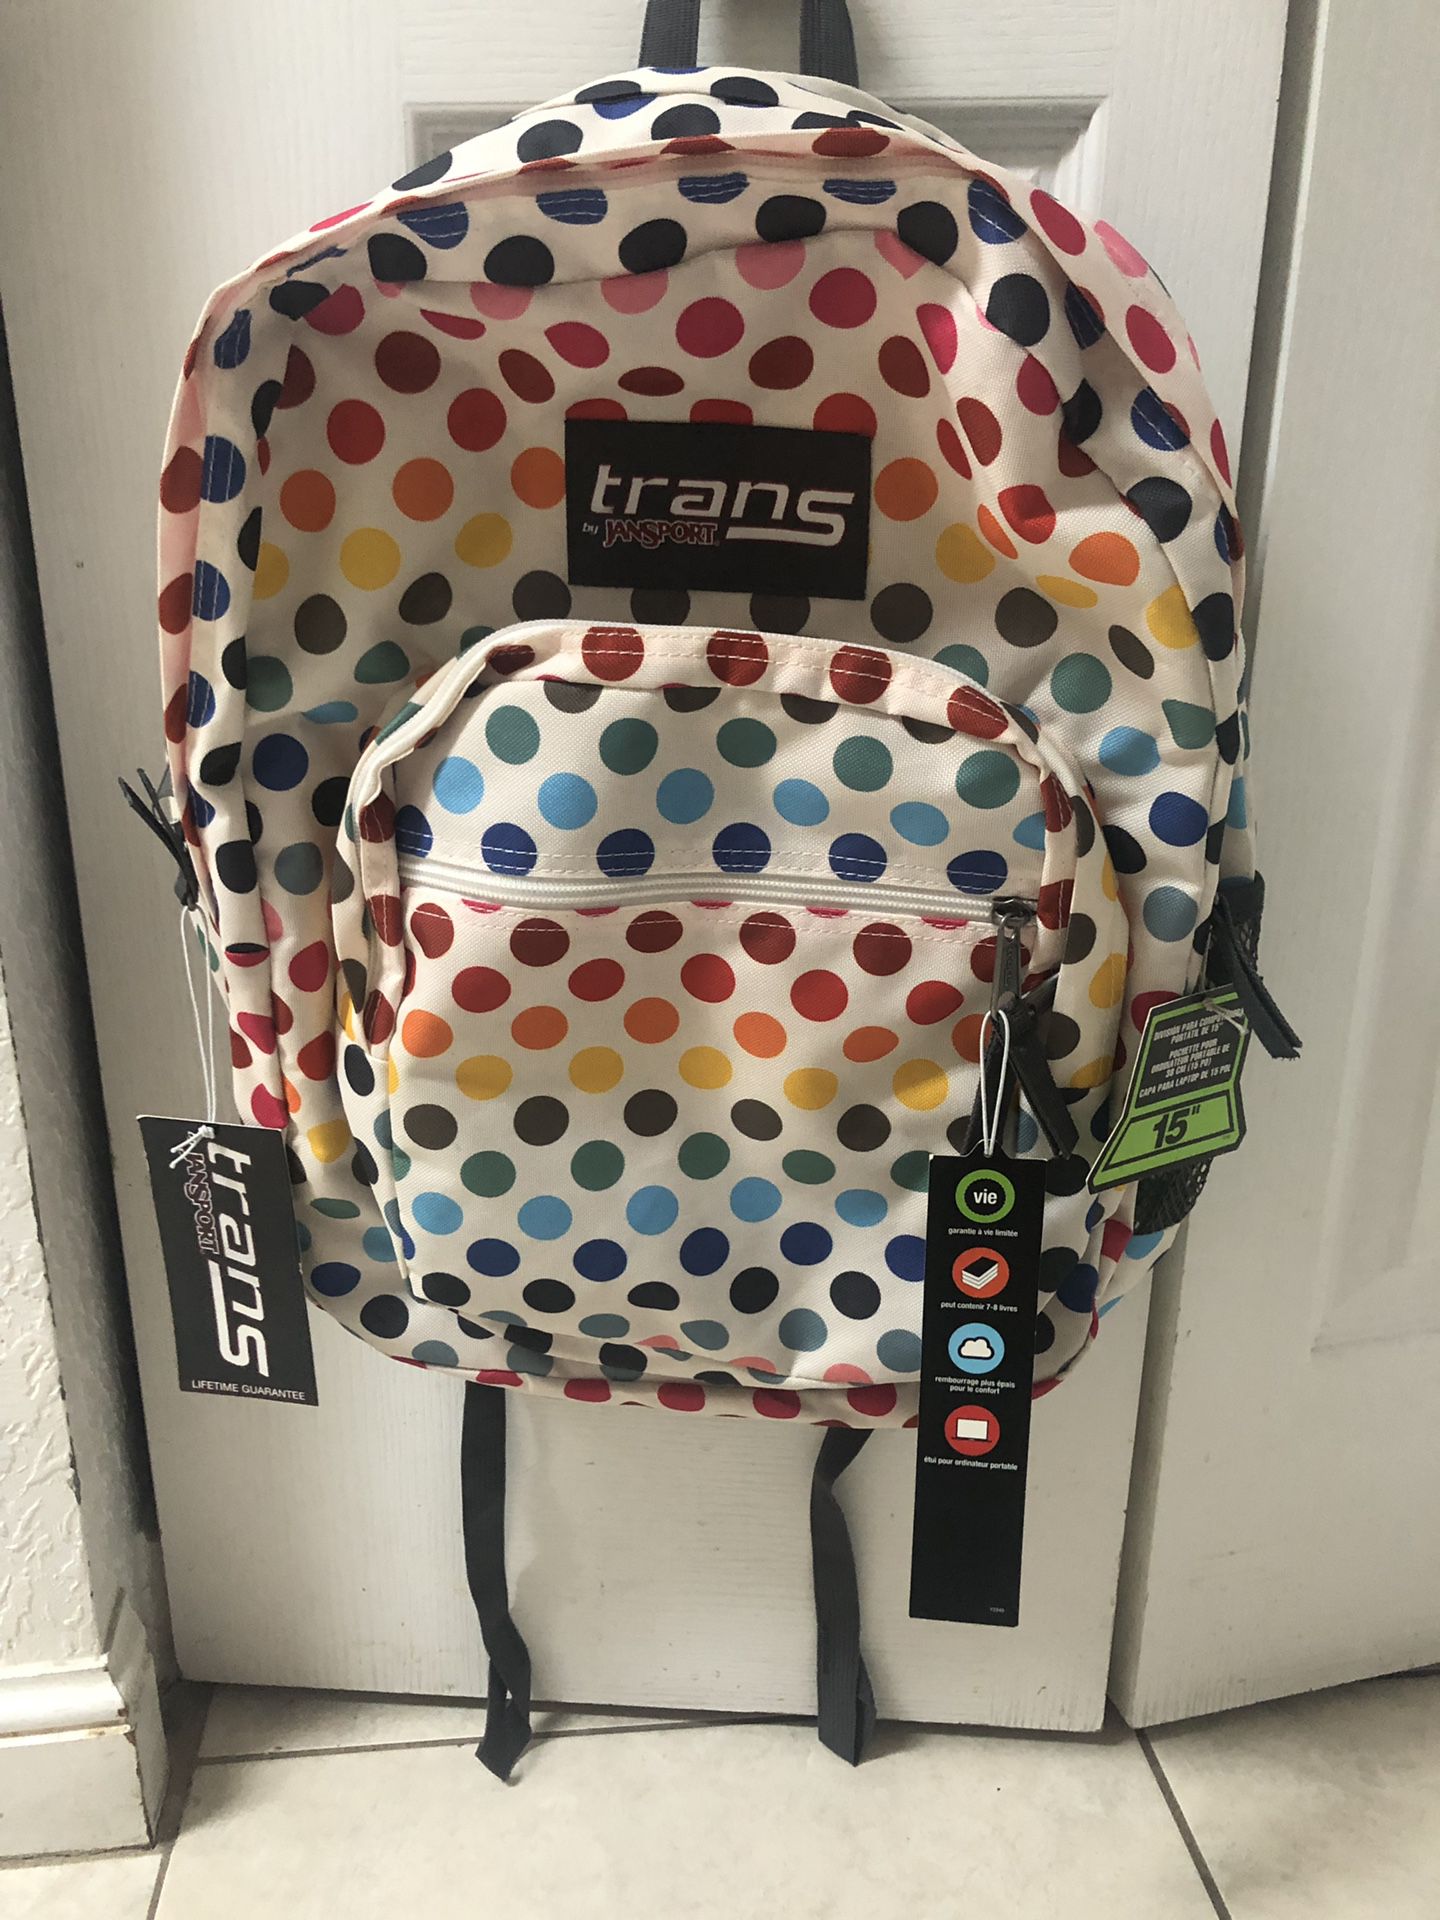 Brand New Jansport Backpack